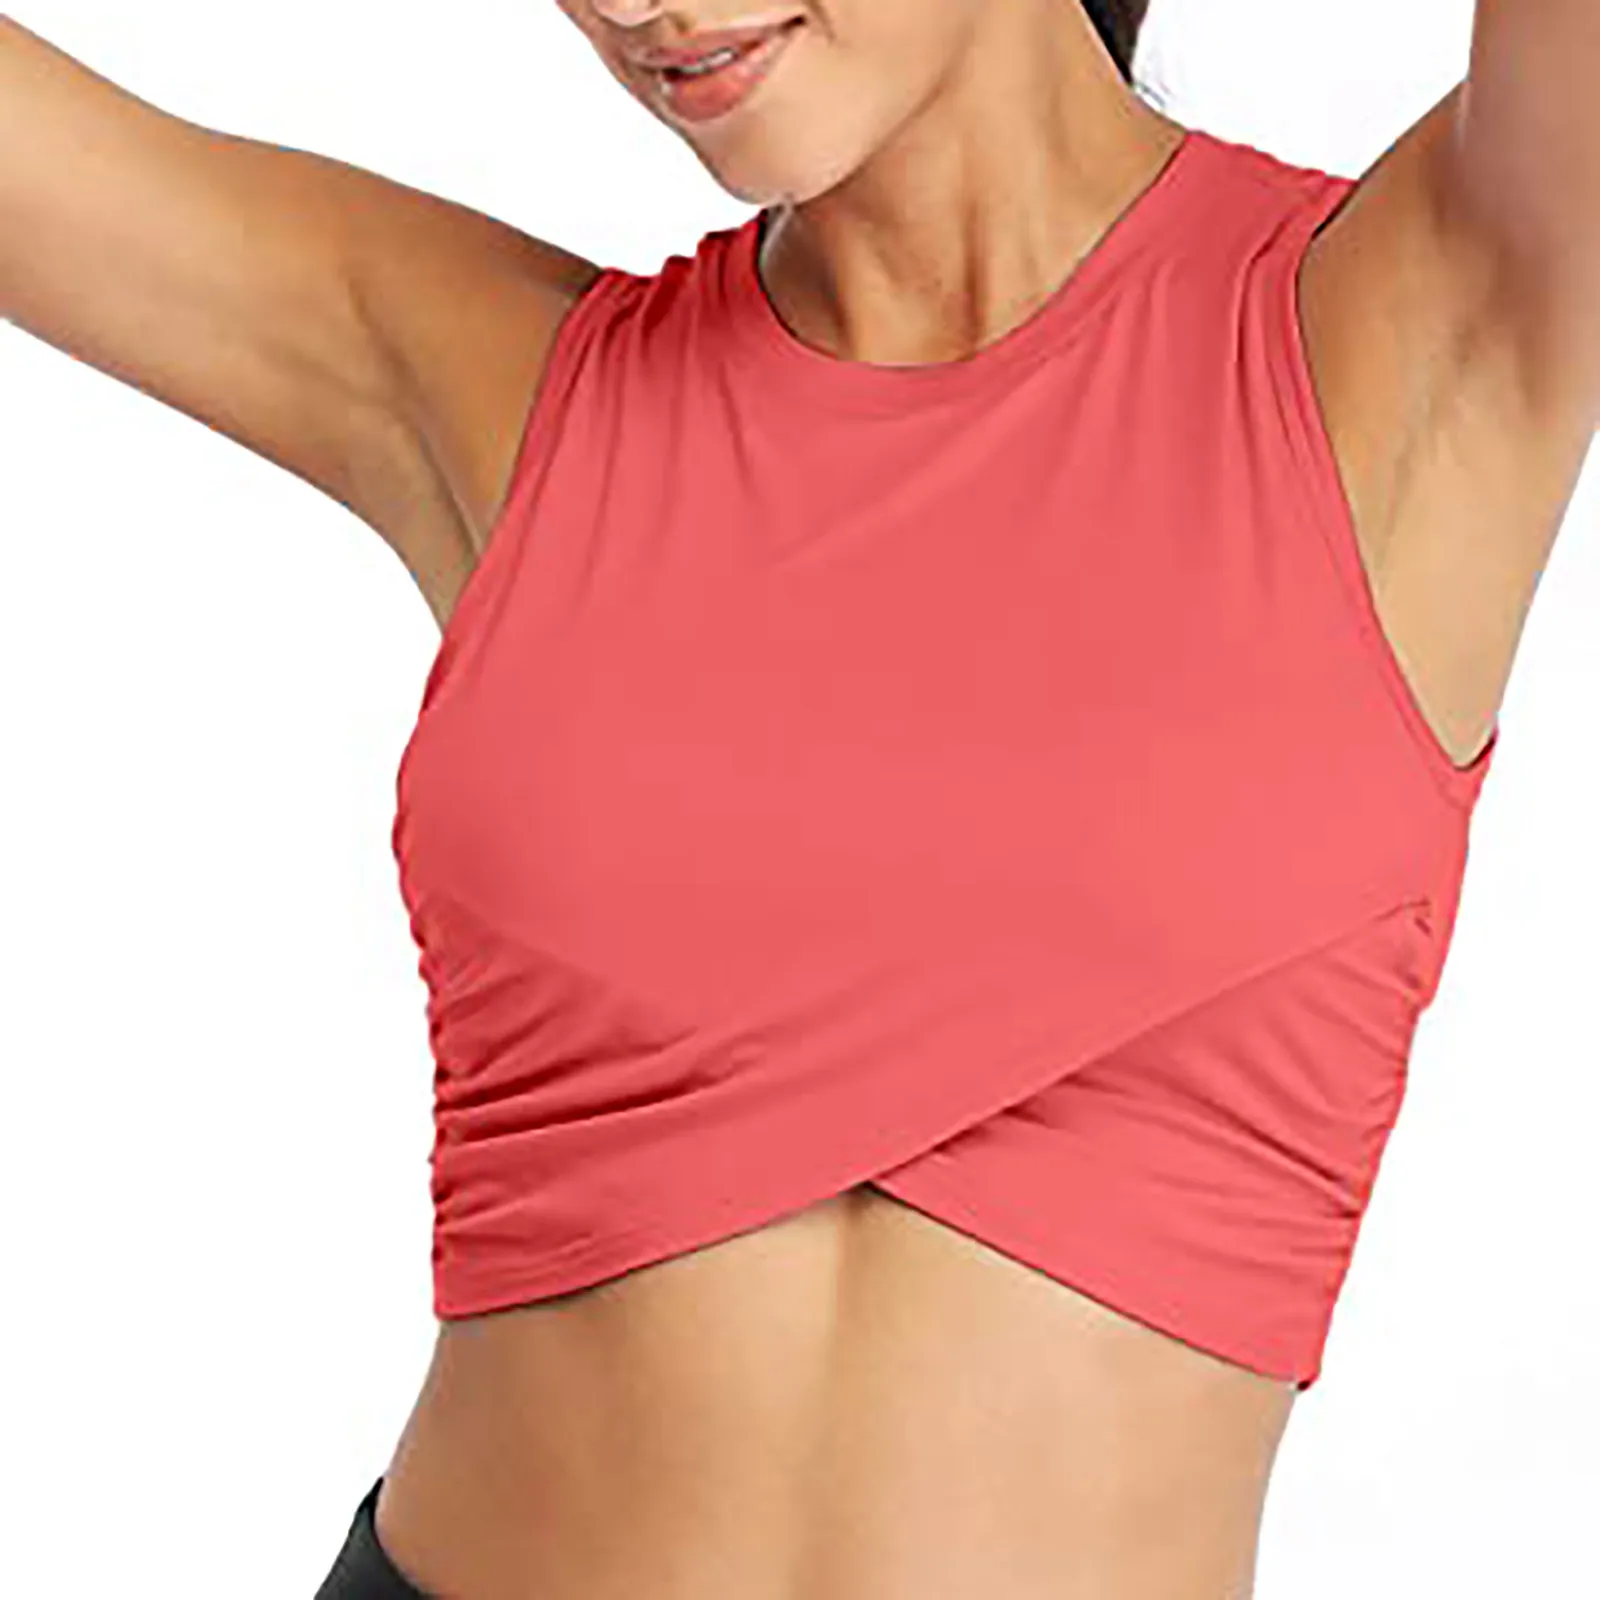 Sports Vest Women's Running Fitness Workout Tops For Women Cropped Tank Tops Dance Tops Sport Yoga Shirts майка для фитнеса